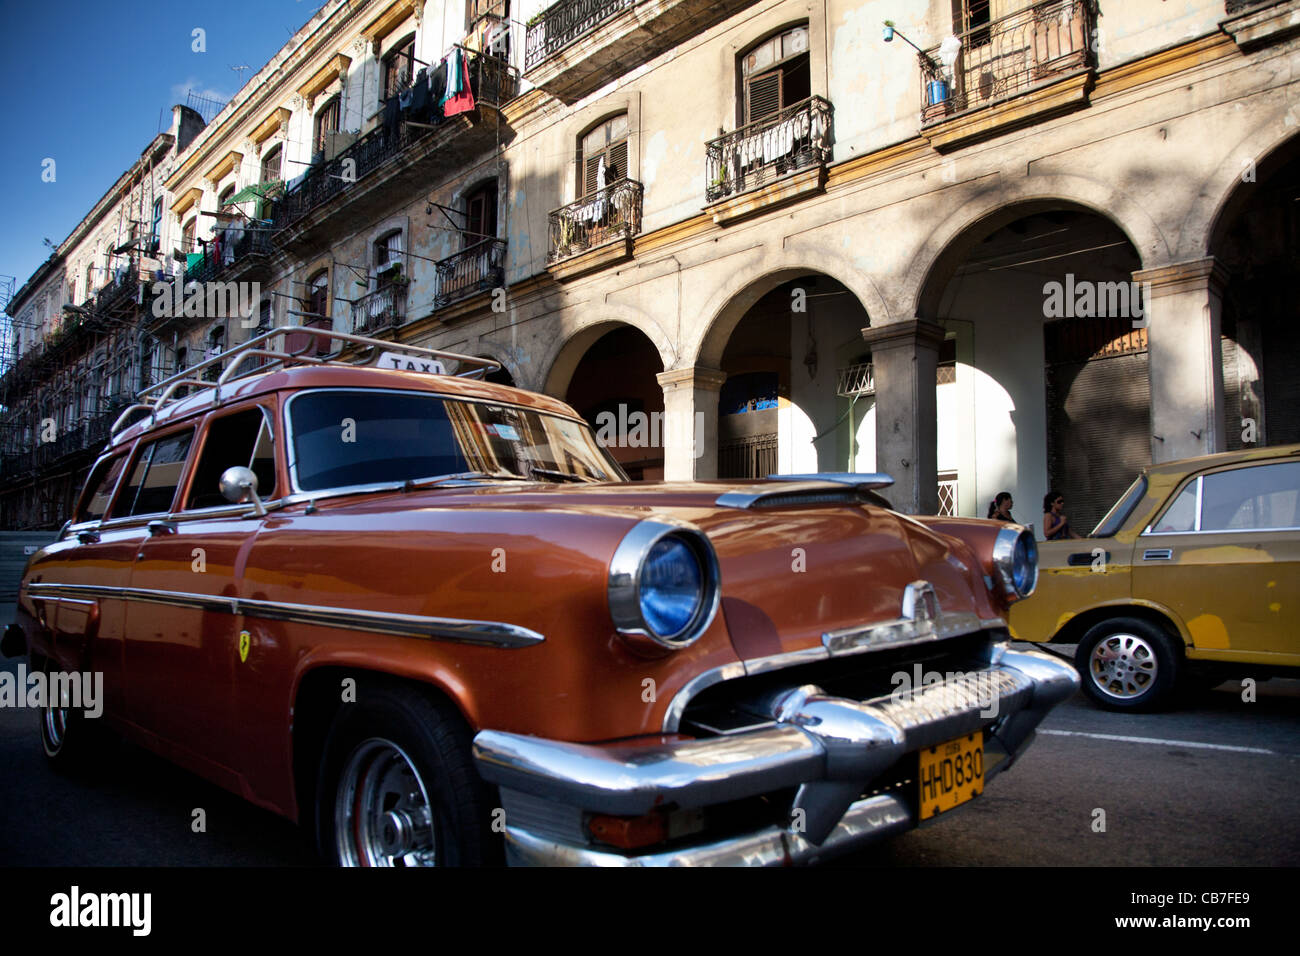 Vintage car Taxi, Havana (La Habana), Cuba Stock Photo